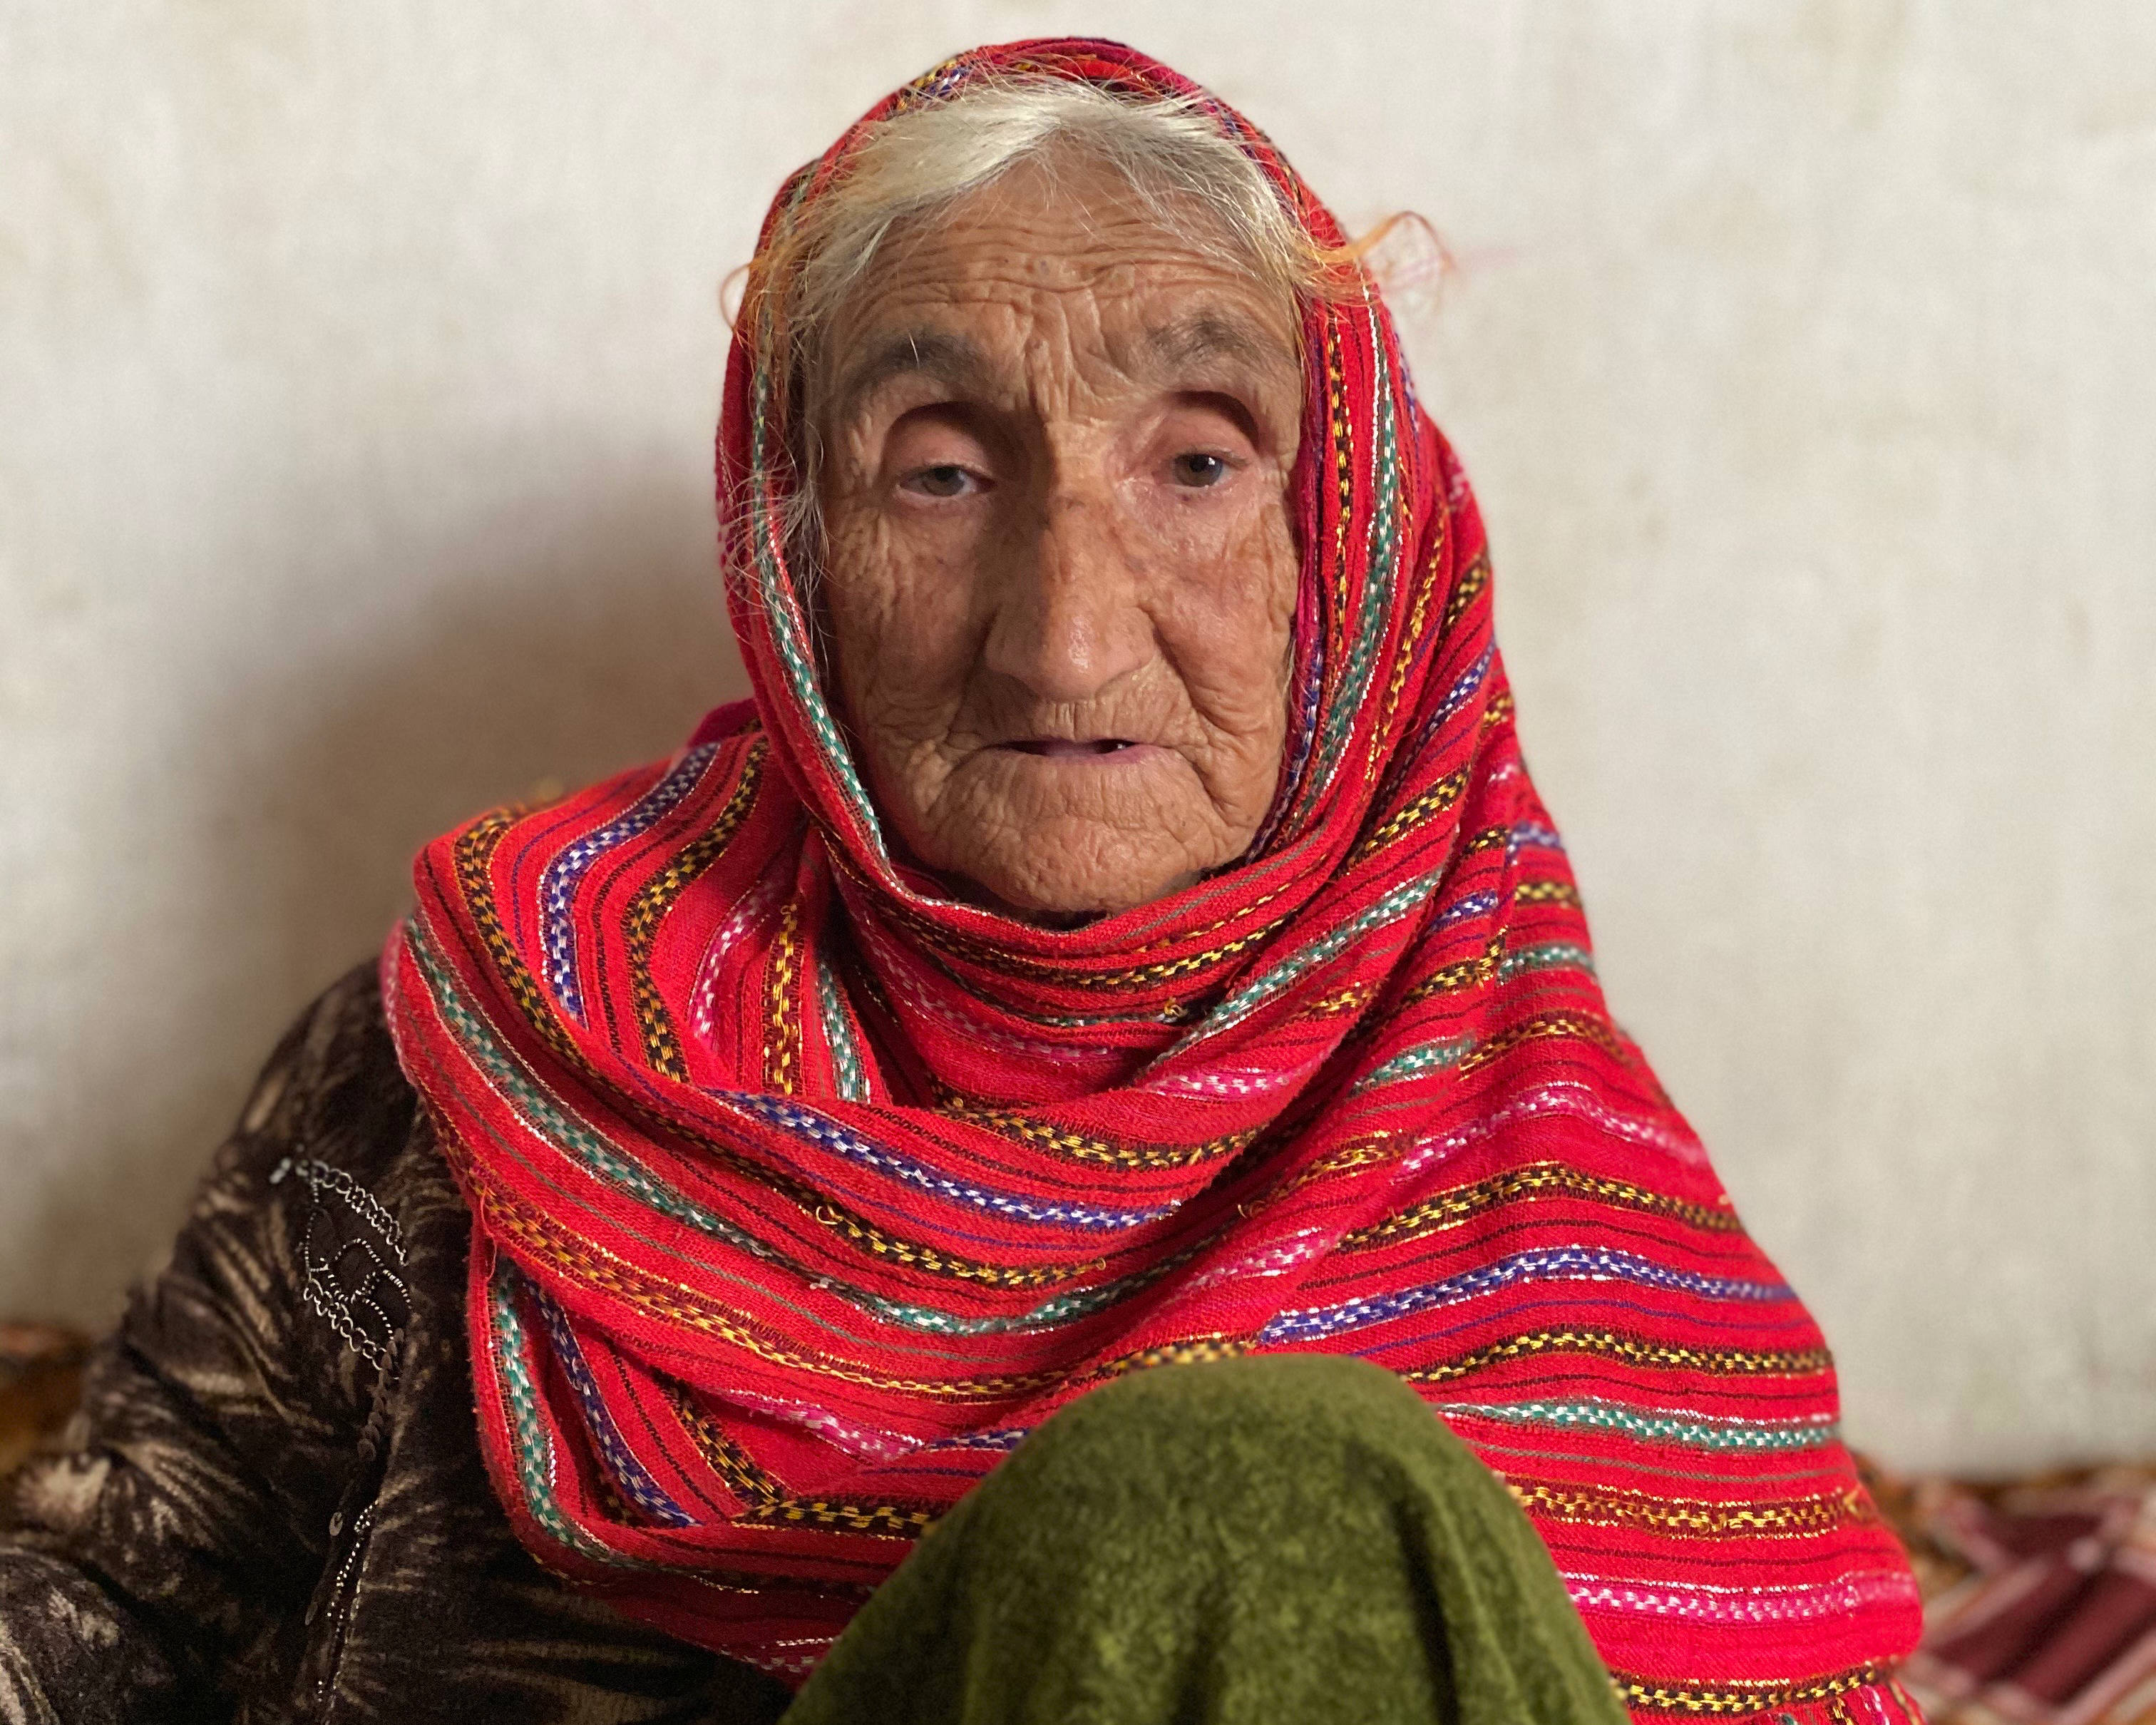 Afghnistan widow